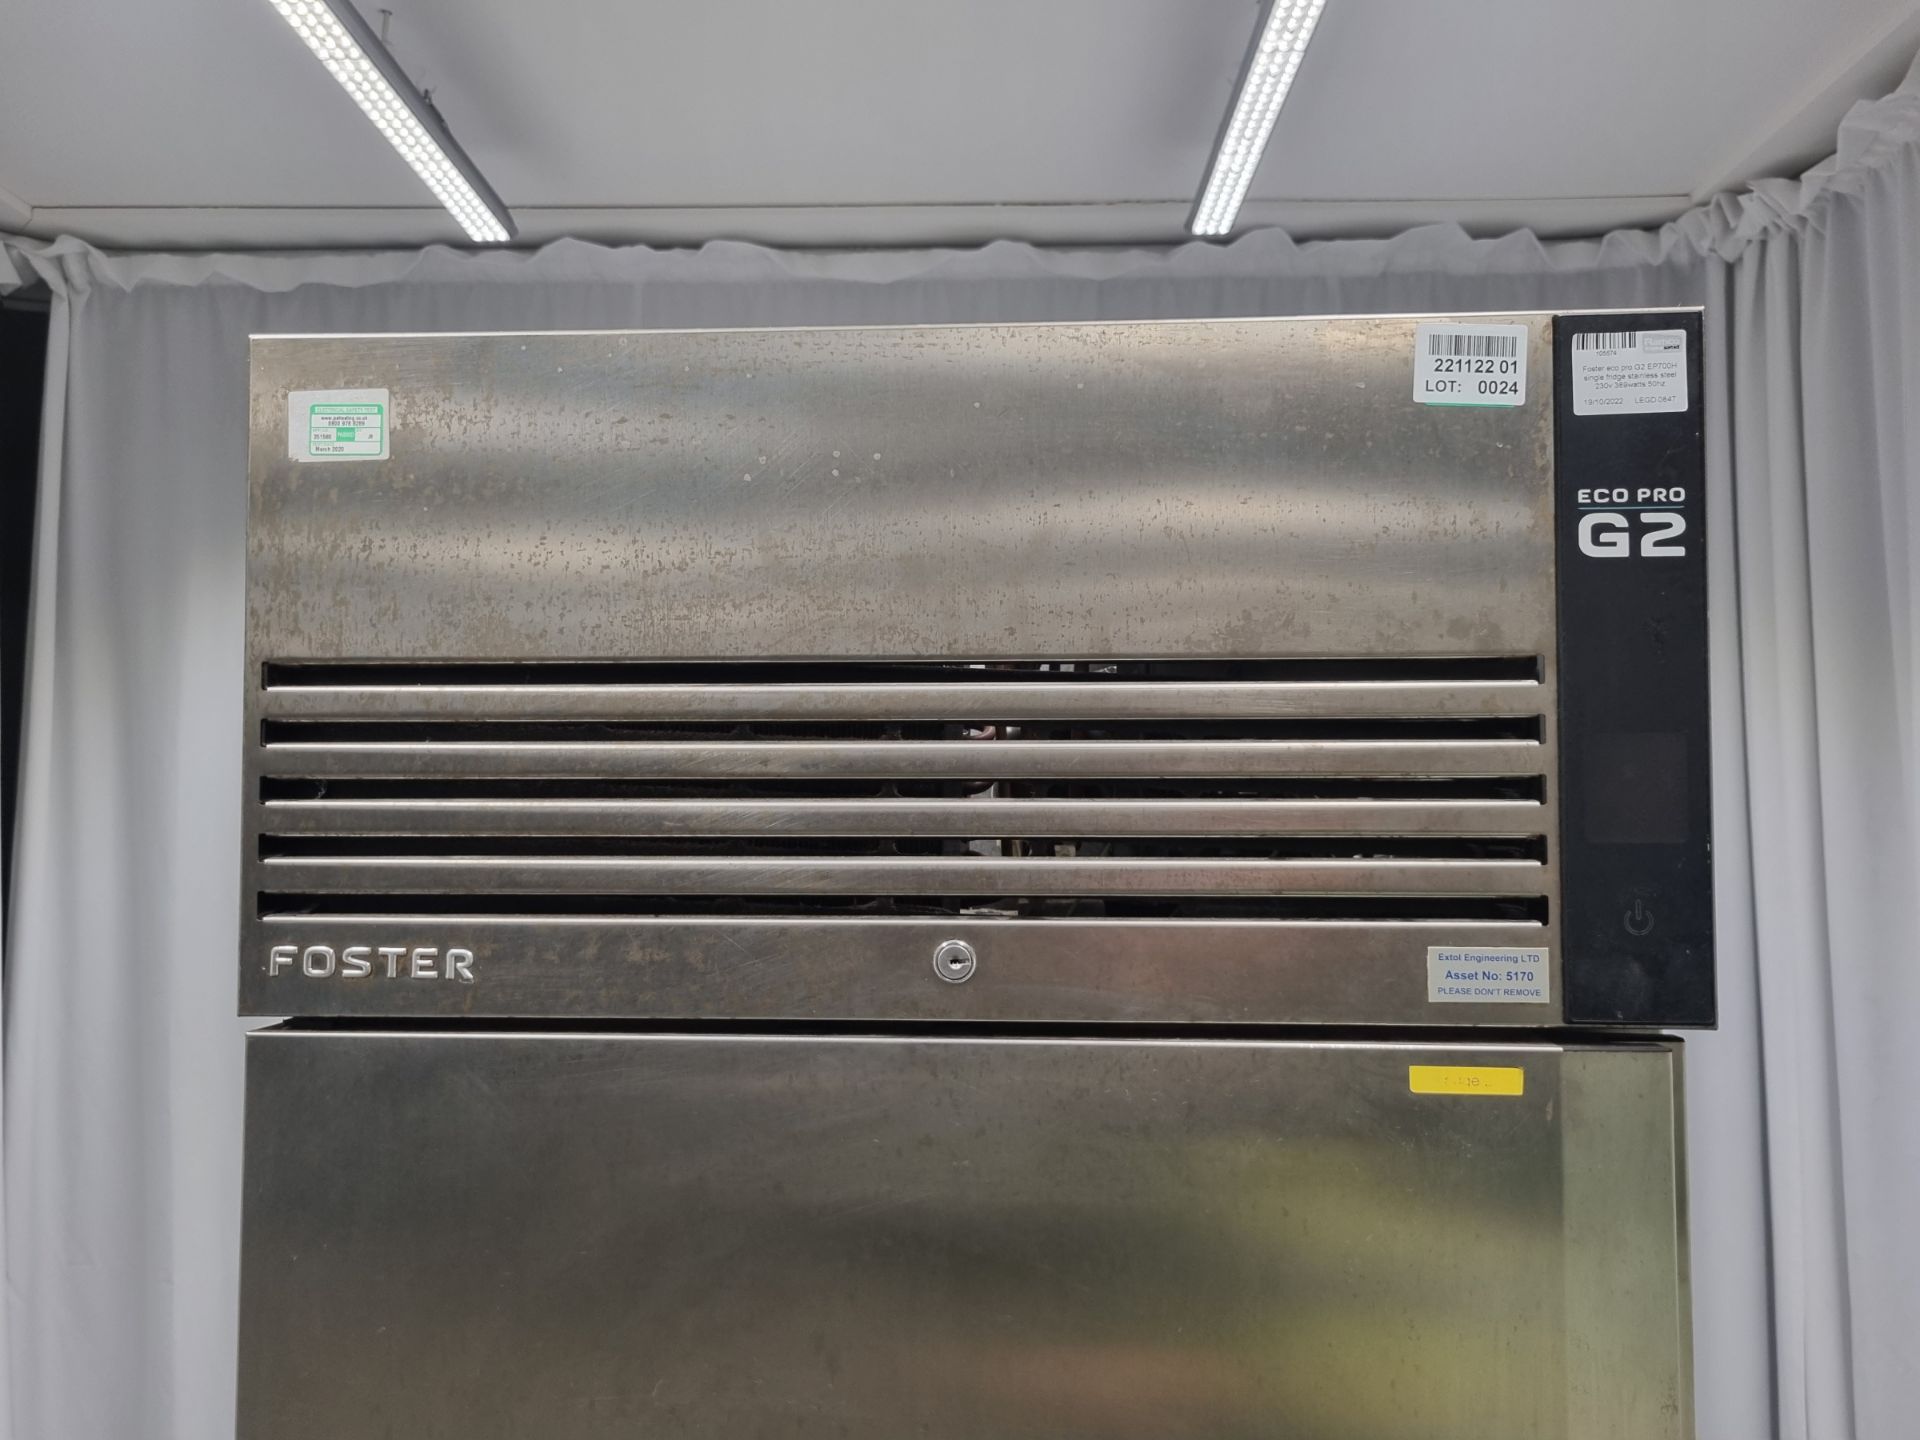 Foster eco pro G2 EP700H single fridge stainless steel 230v 389 watts 50hz - Image 8 of 8